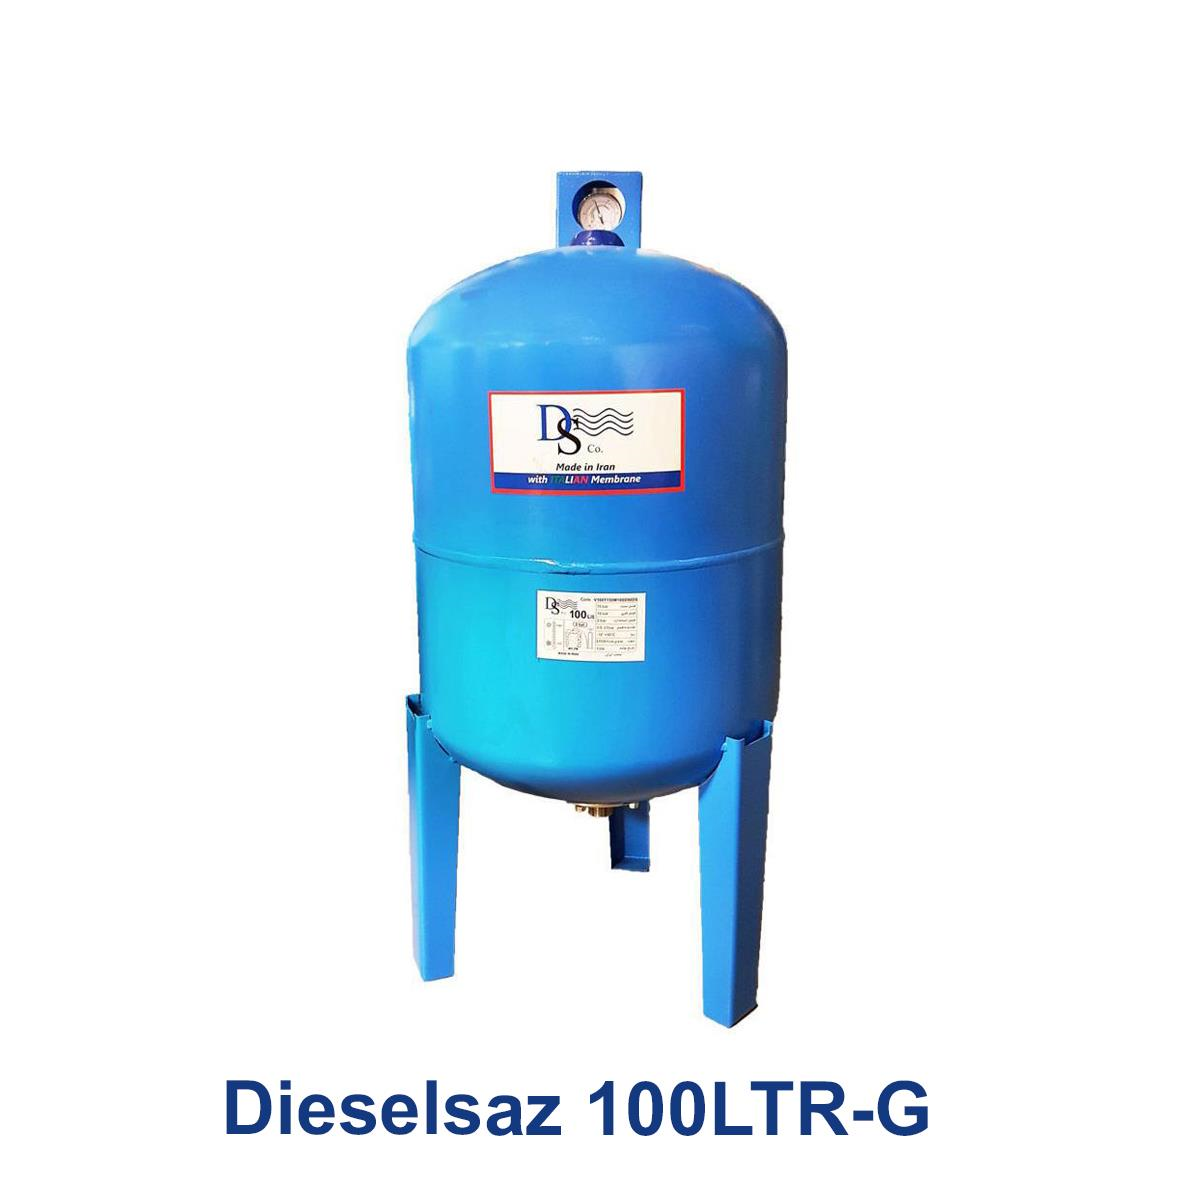 Dieselsaz-100LTR-G